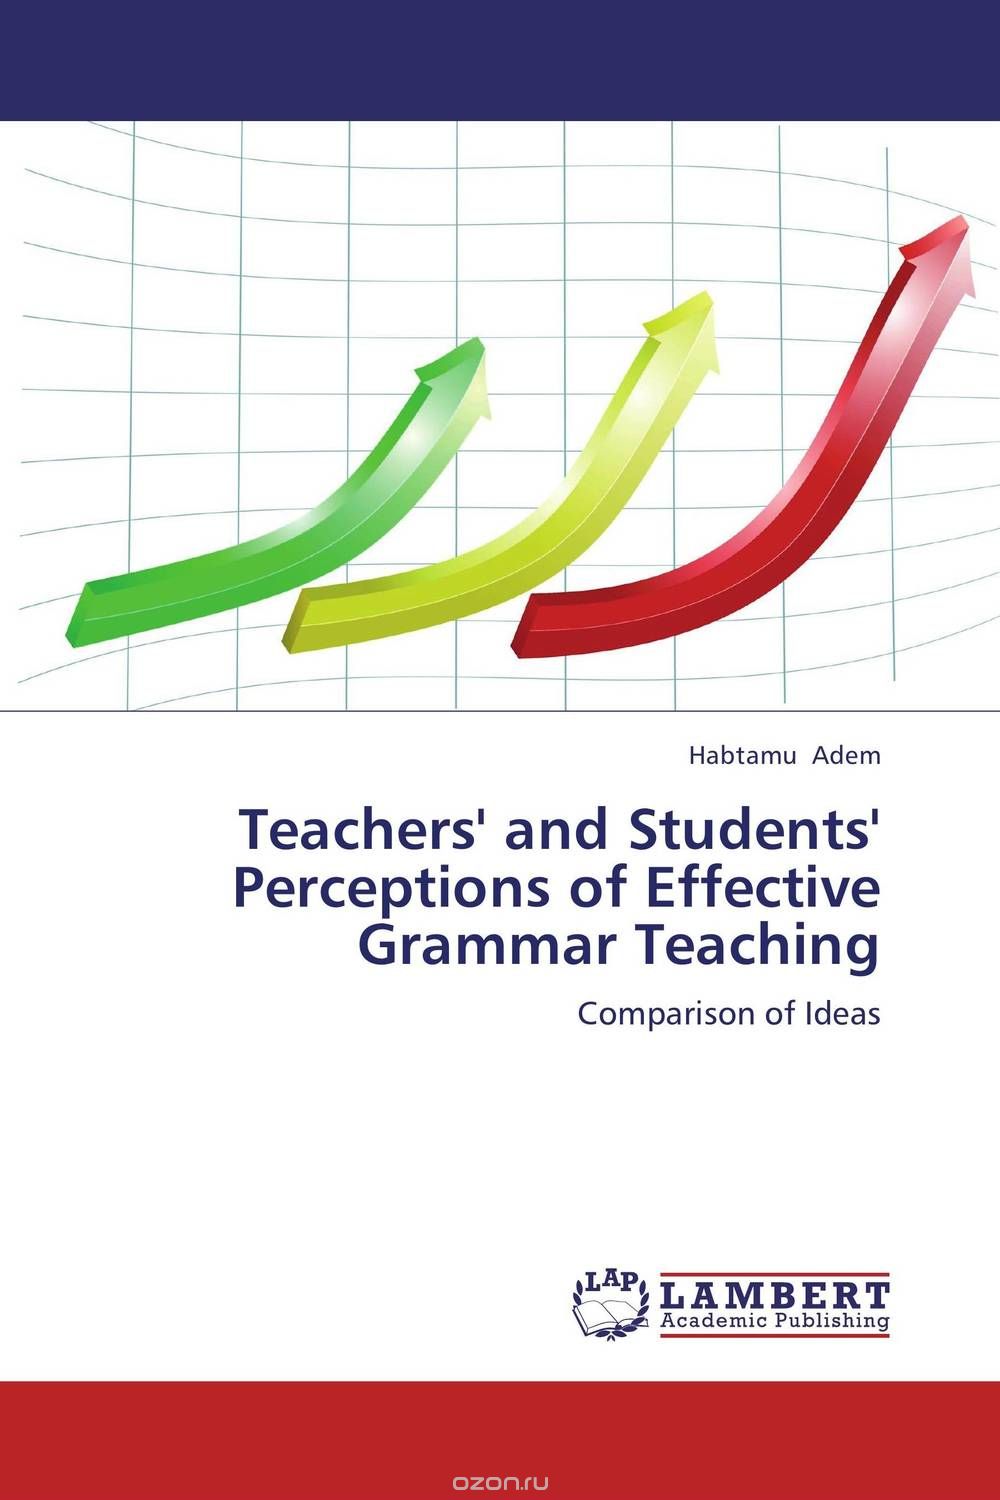 Скачать книгу "Teachers' and Students' Perceptions of Effective Grammar Teaching"